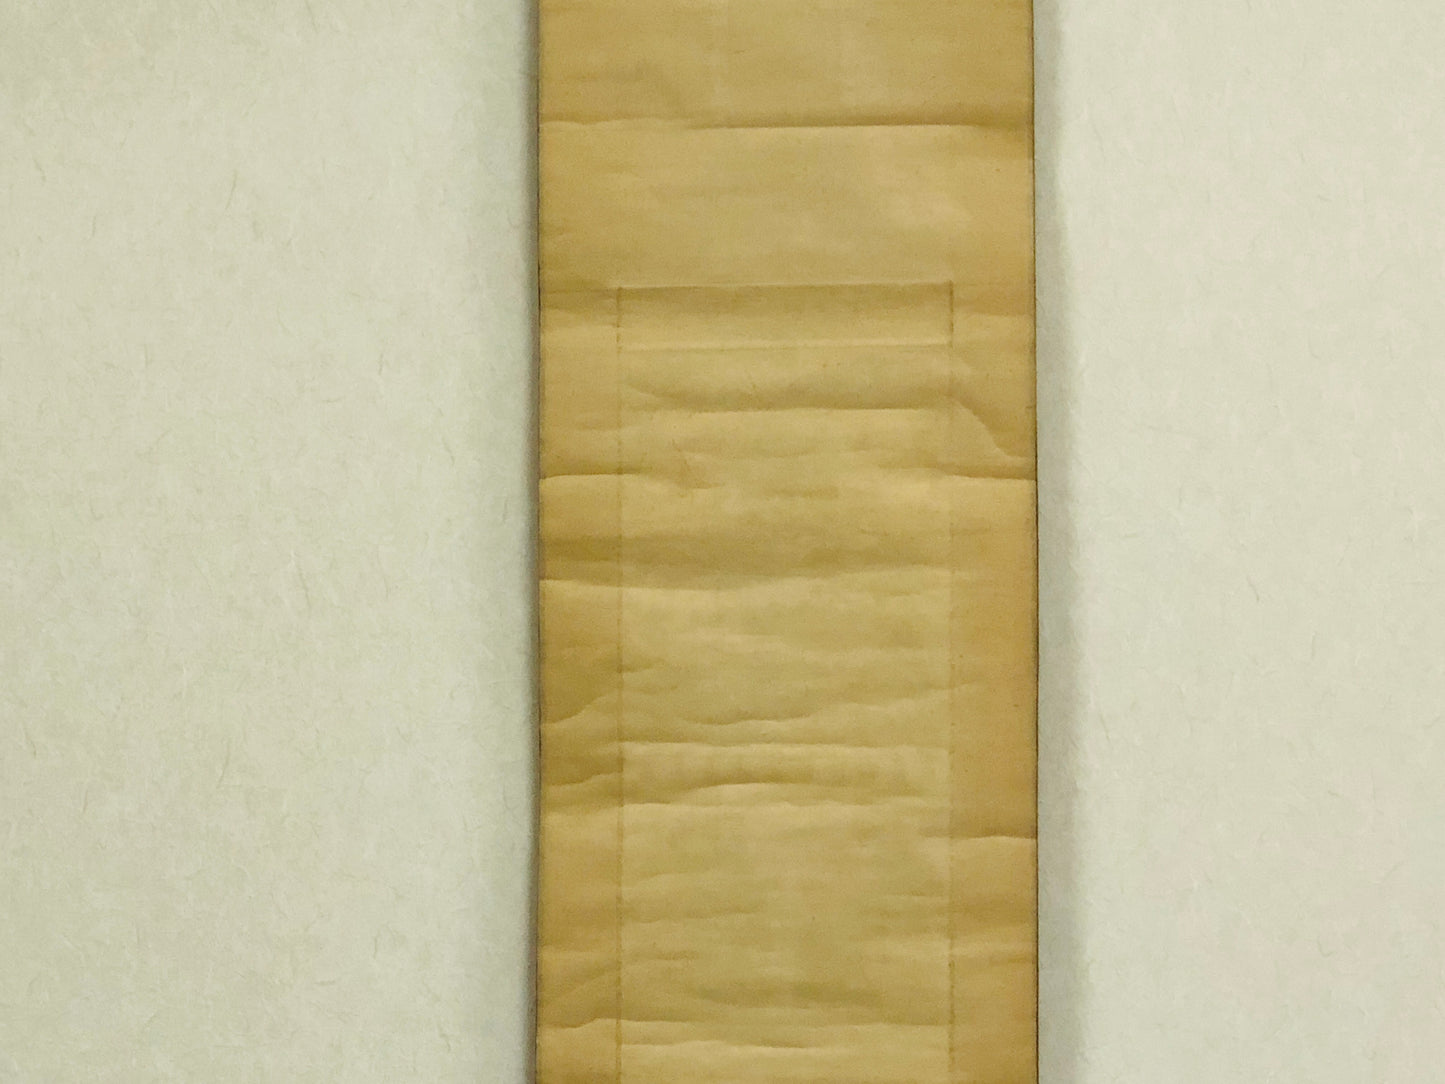 Y2957 KAKEJIKU Heavenly Gods woodblock print Japan hanging scroll wall decor